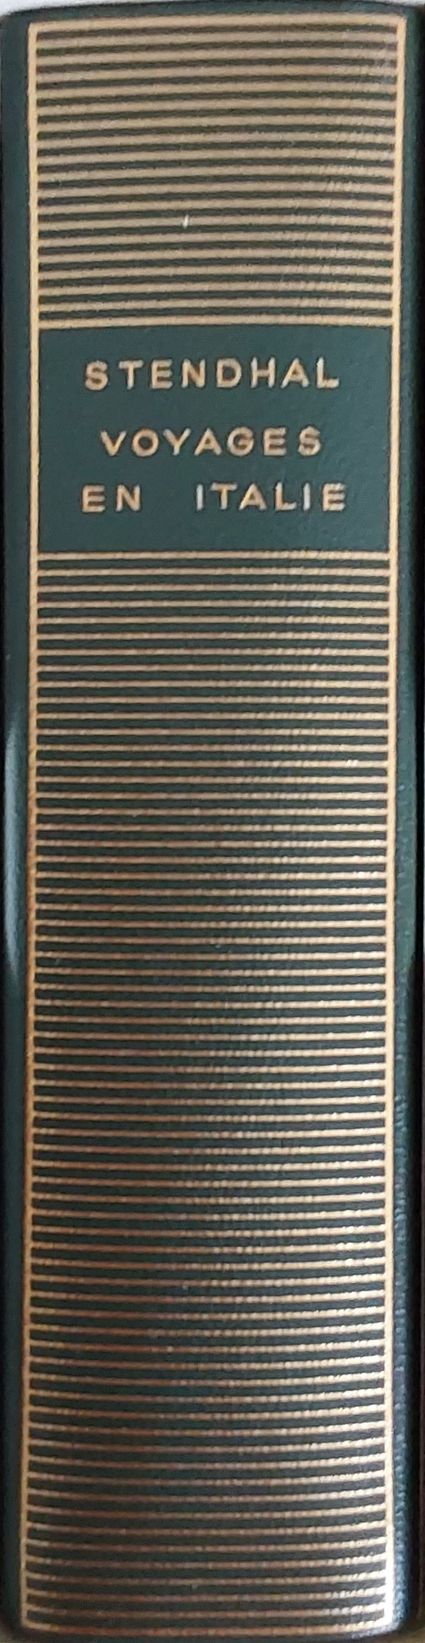 Volume 386 de Stendhal dans la Bibliothèque de la Pléiade.